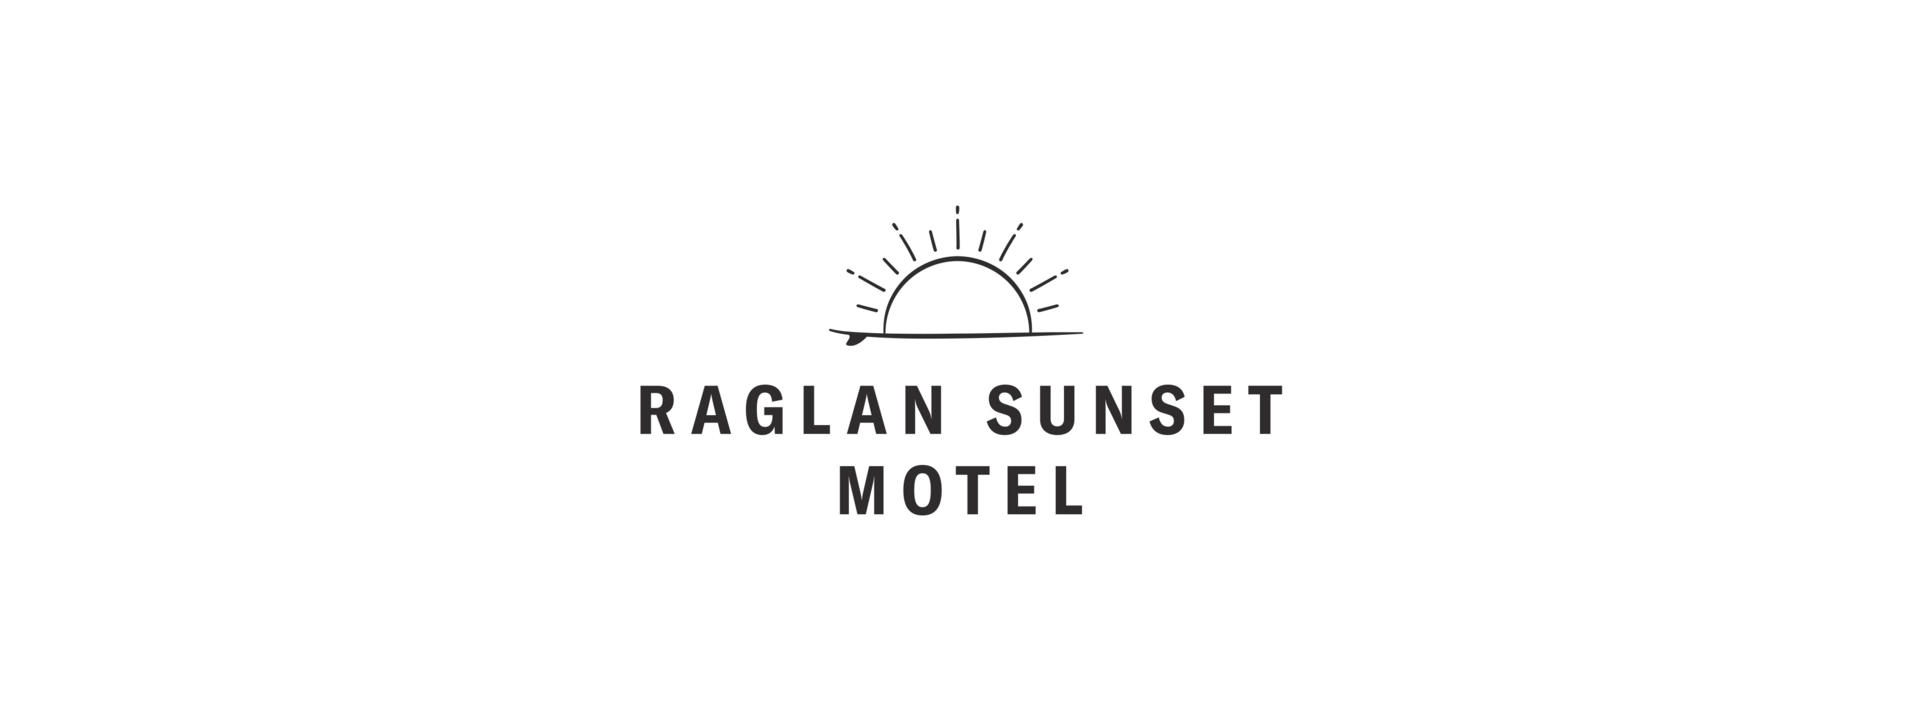 copy-of-raglan-sunset-motel_logo_horizontal.jpg